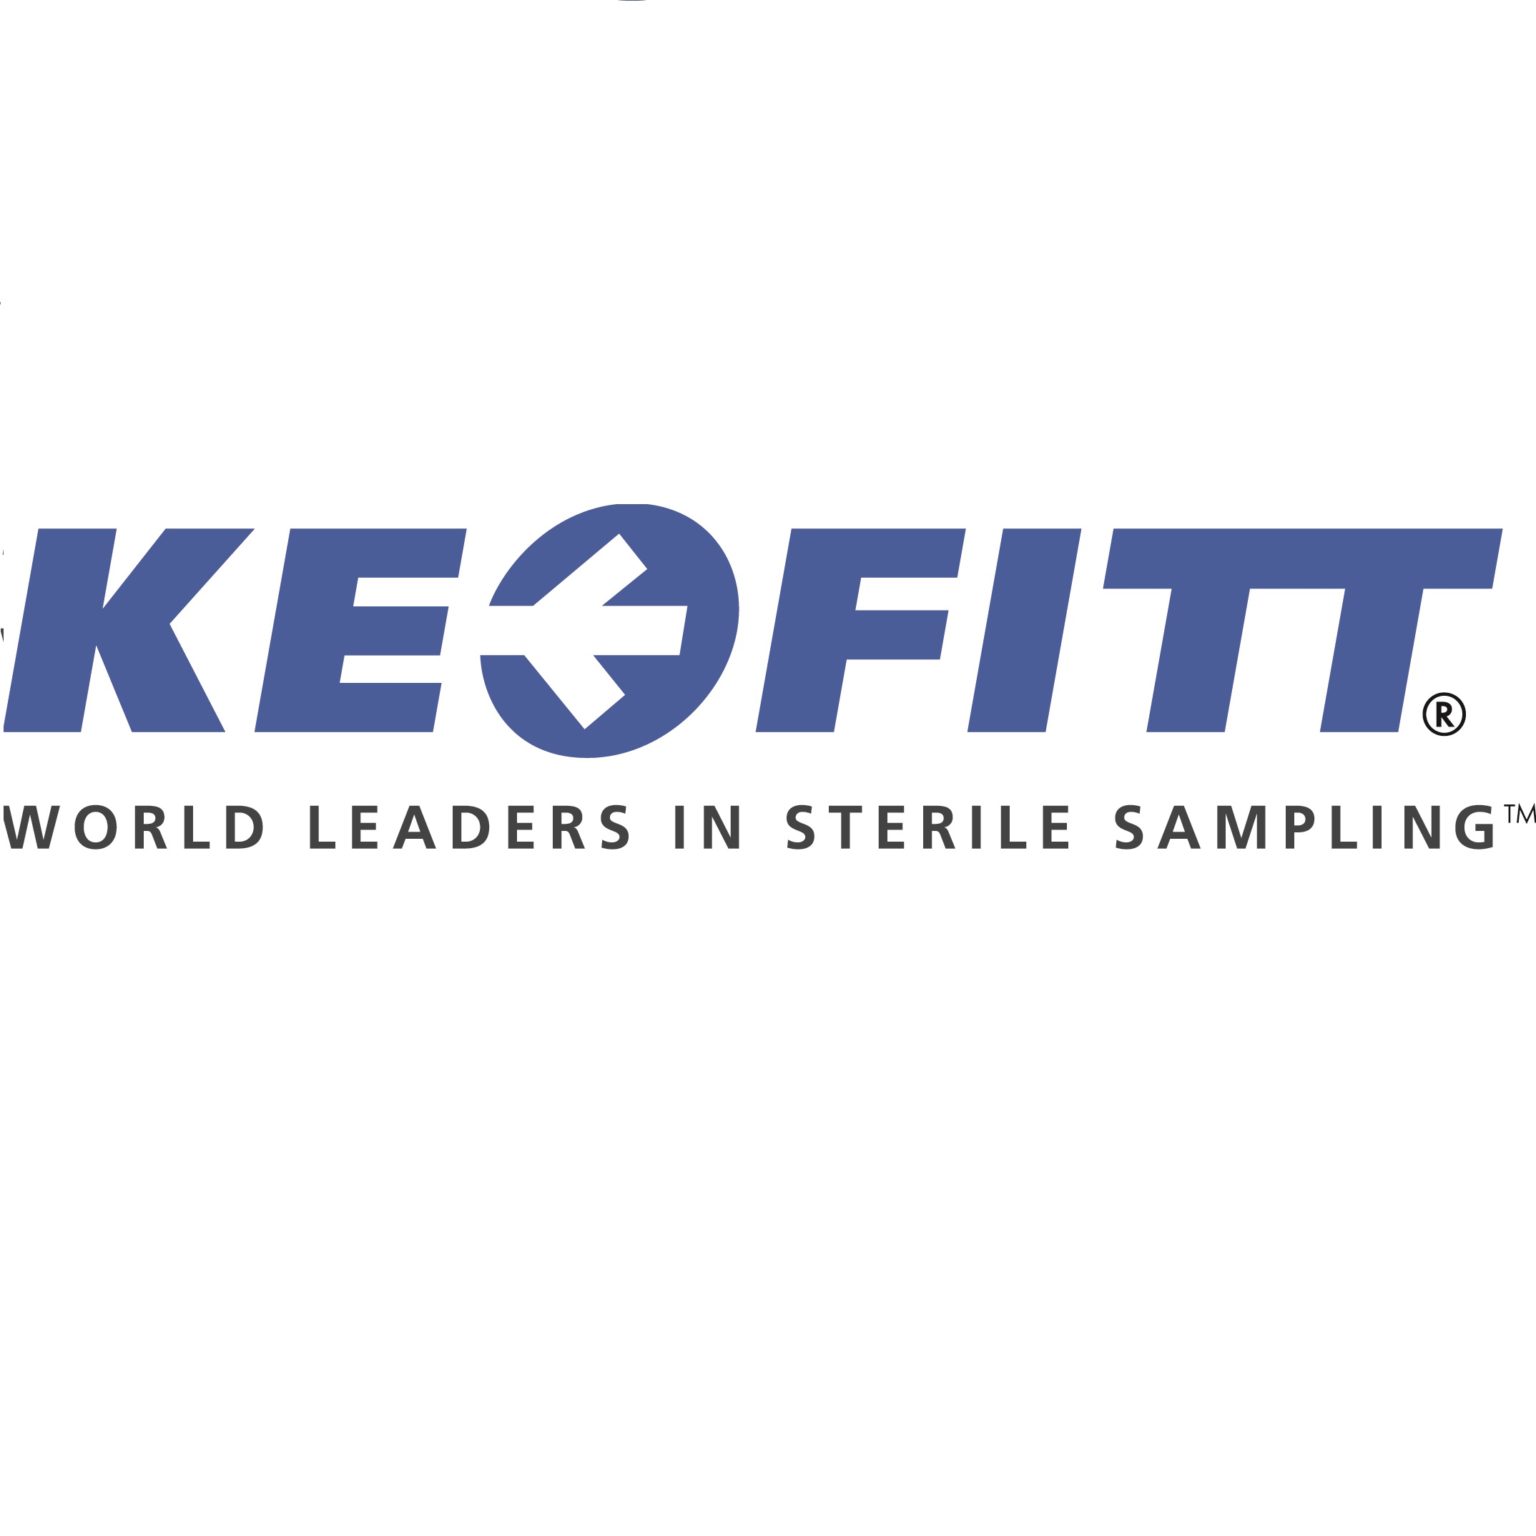 Keofitt Logo Thumbnail